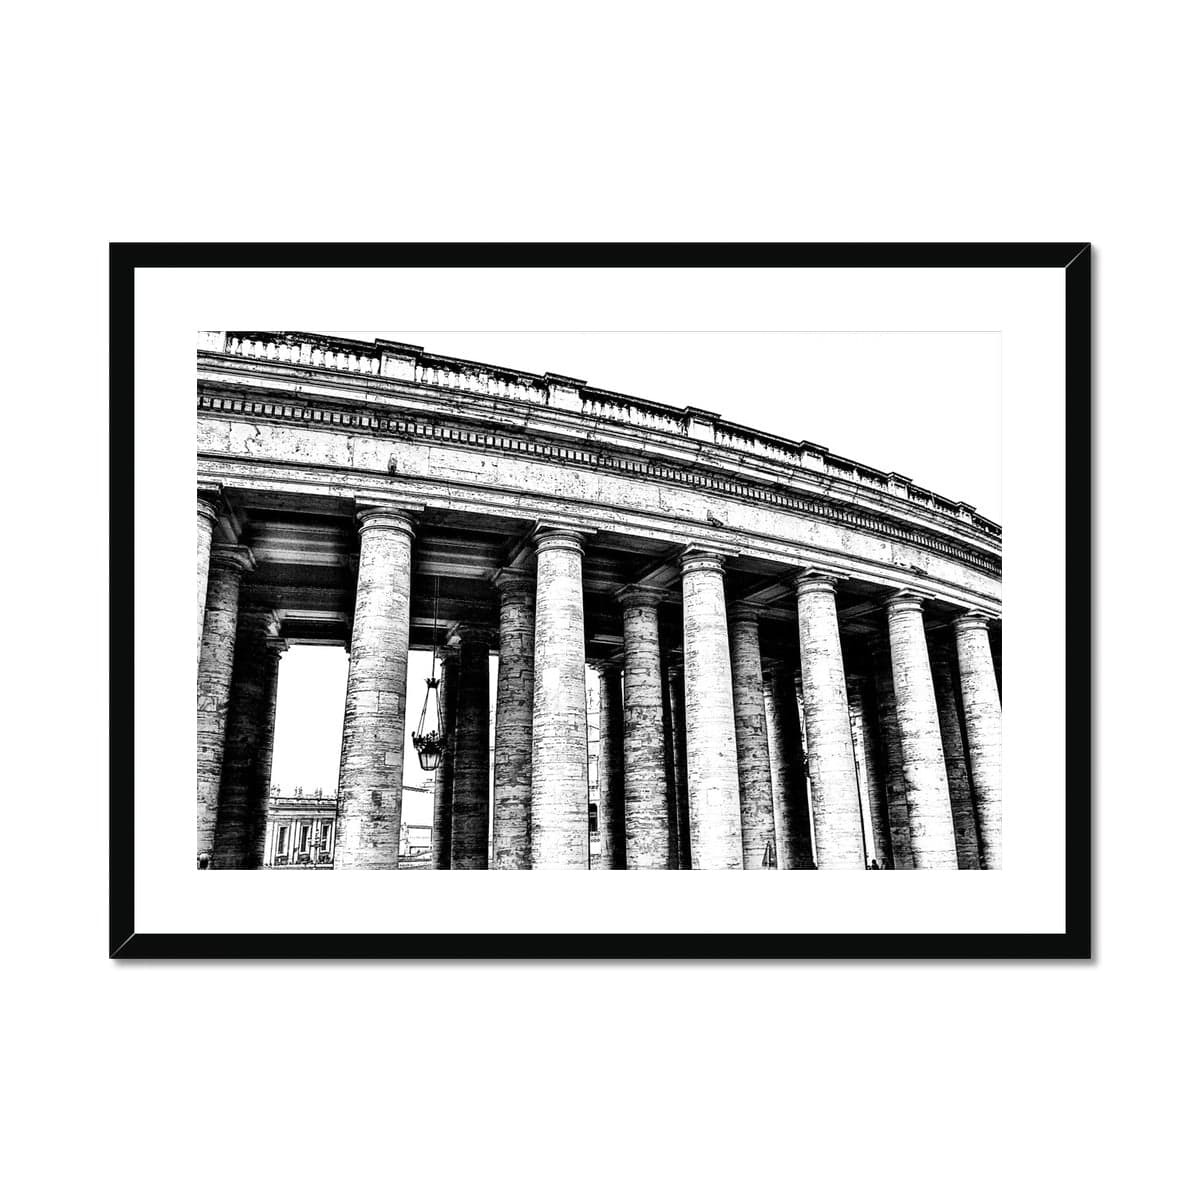 Seek & Ramble Framed A4 Landscape (29x21cm) / Black Frame The Colonnades of St. Peter's The Vatican Framed & Mounted Print